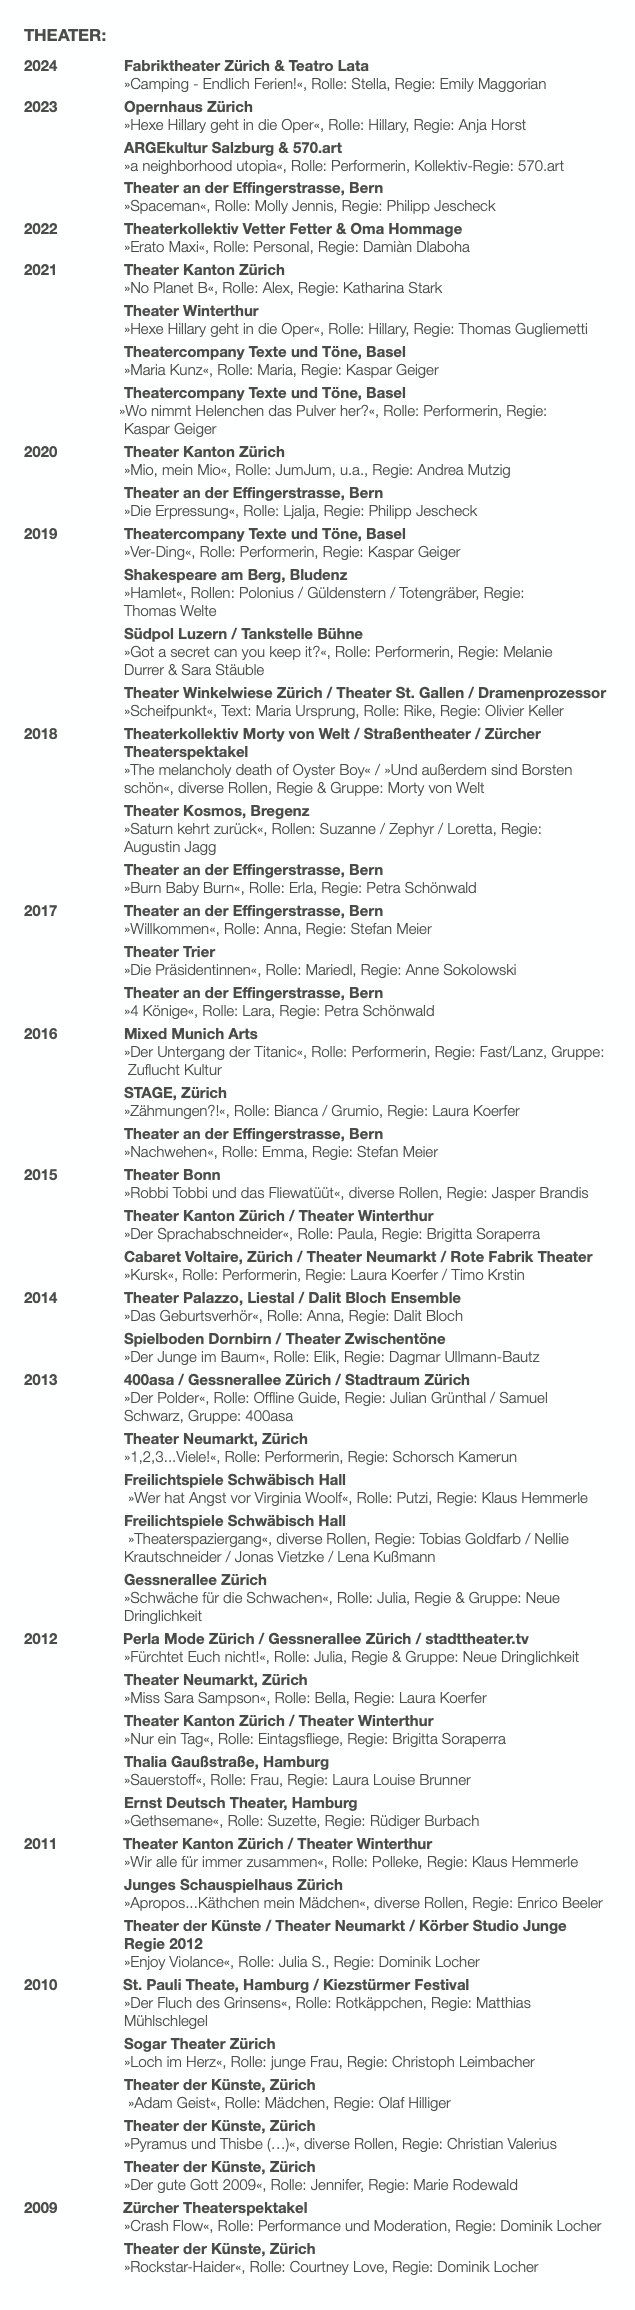 THEATER:2021                Theater Kanton Zürich